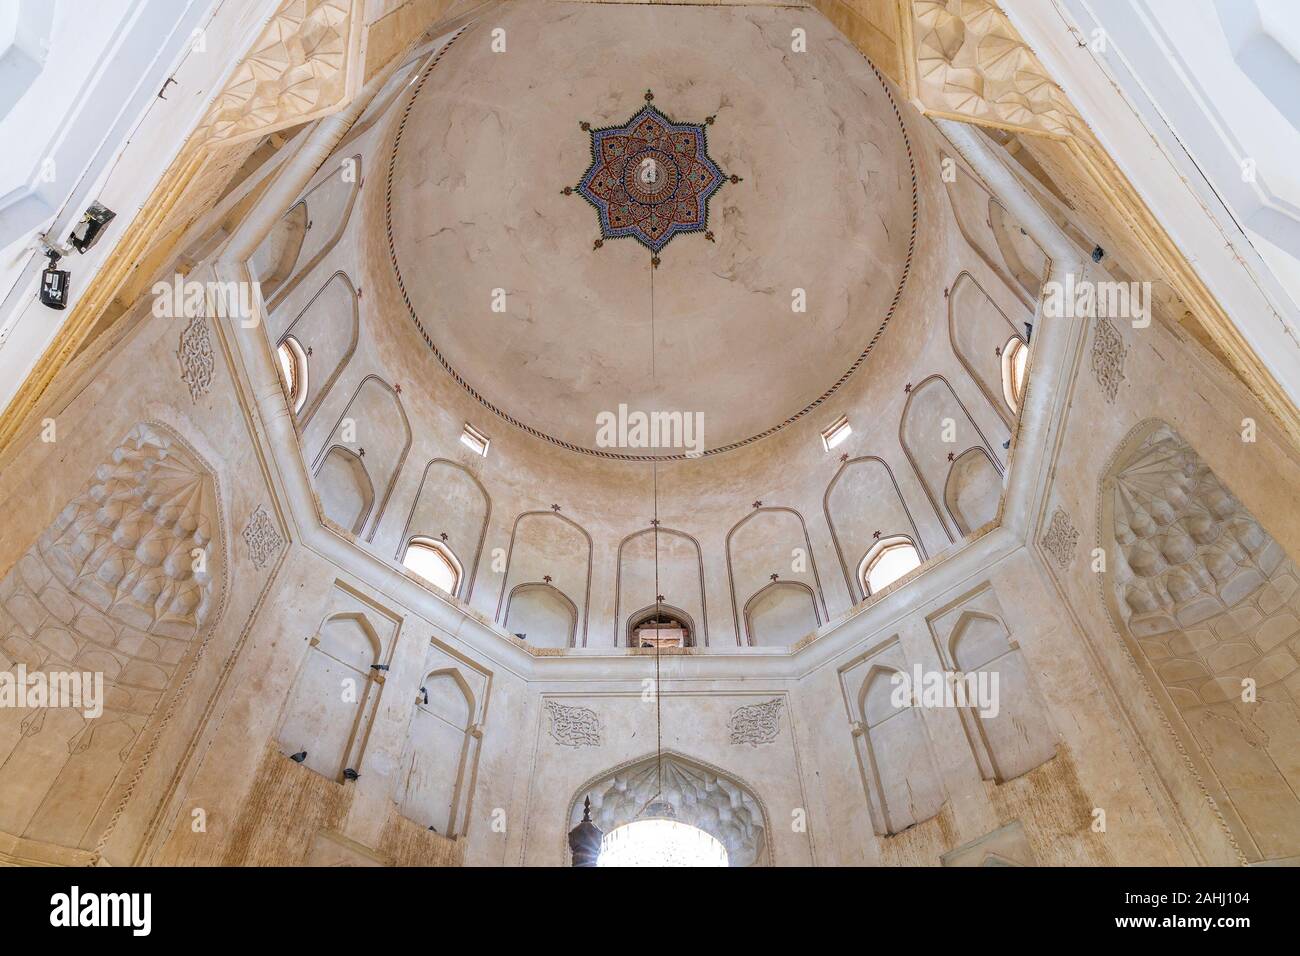 Multan Darbar Hazrat Bahauddin Zakariya Multani Tomb Picturesque Interior Ceiling View Stock Photo